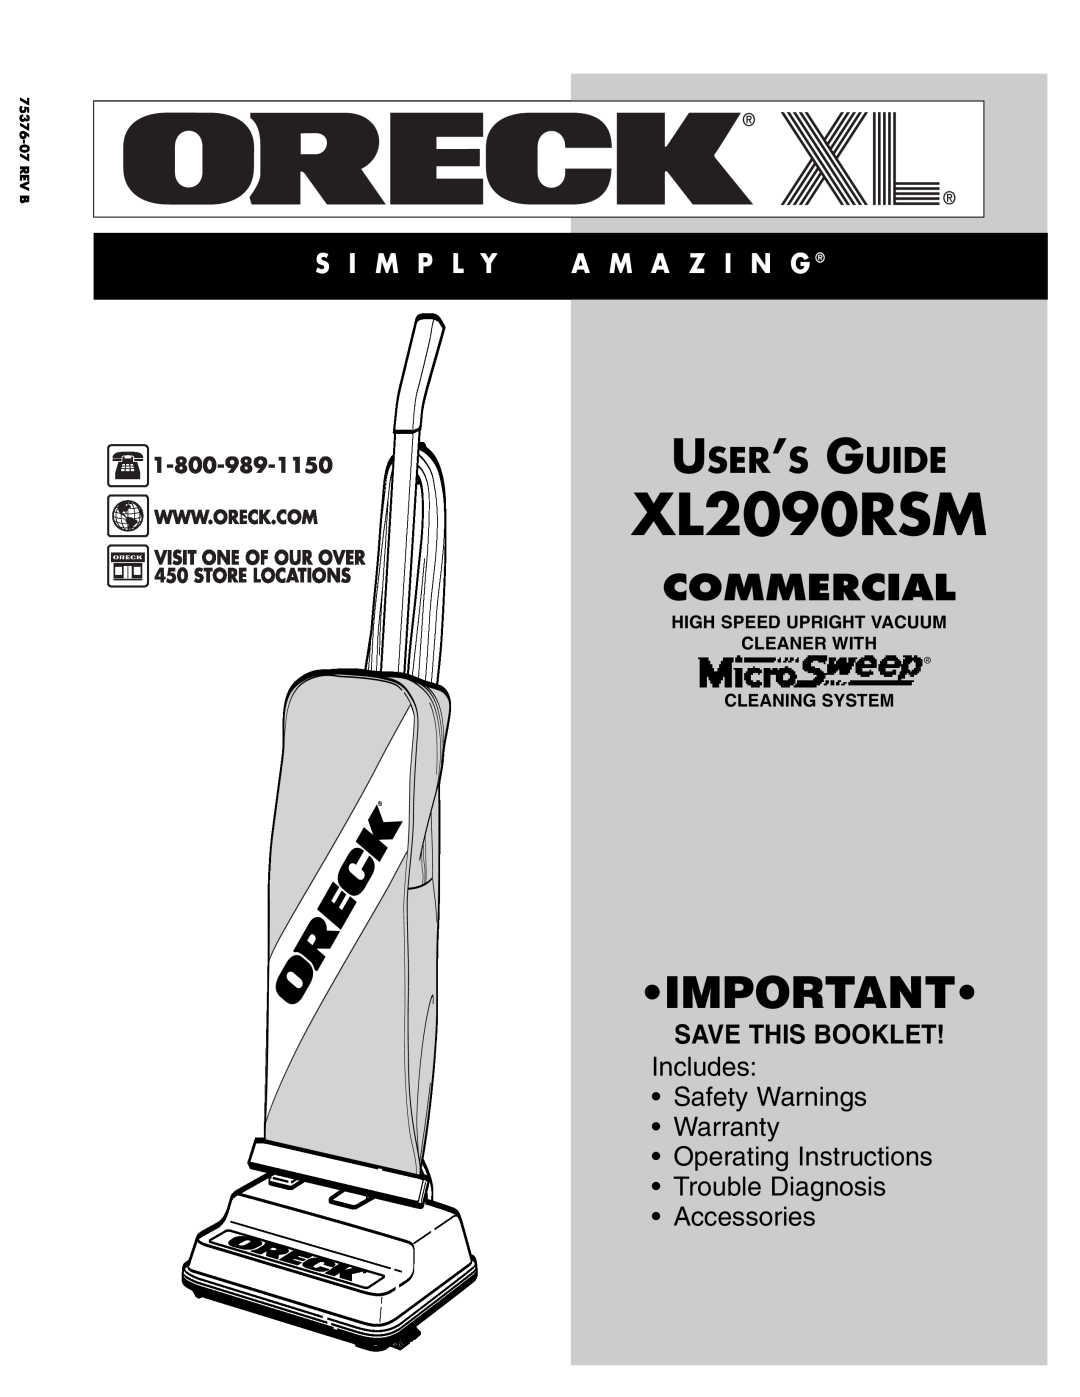 Oreck XL2090RSM warranty Commercial, User’S Guide, S I M P L Y, A M A Z I N G, Save This Booklet, Accessories 